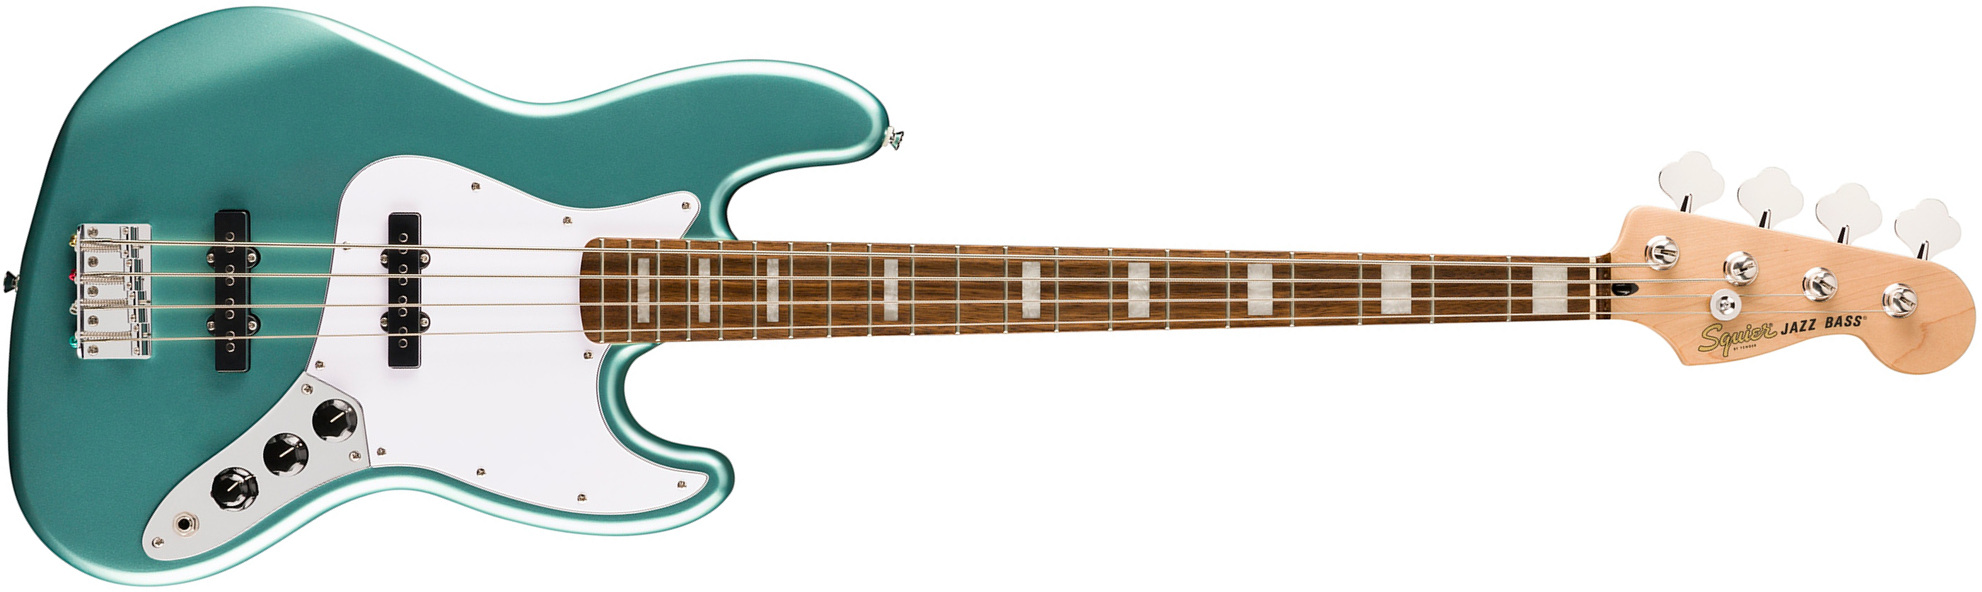 Squier Jazz Bass Active Affinity Lau - Mystic Seafoam Green - Solid body elektrische bas - Main picture